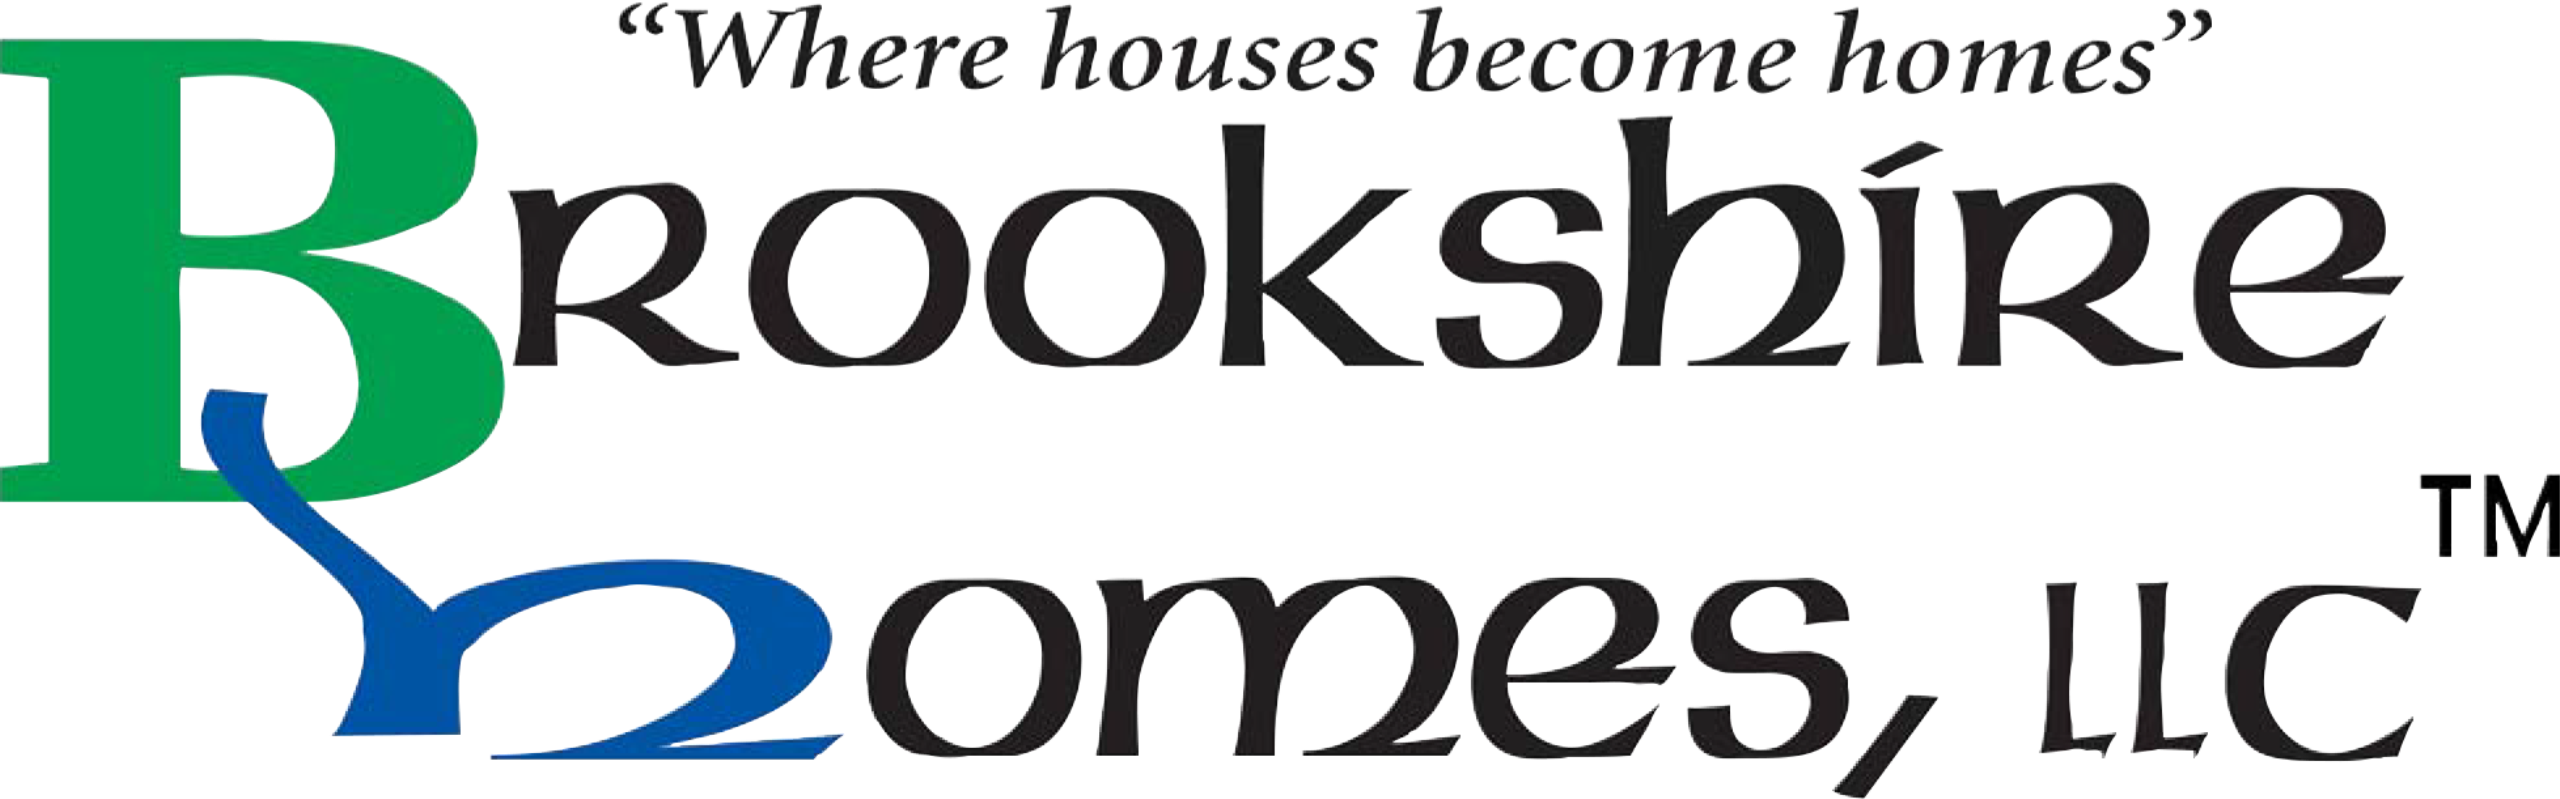 Brookshire Homes, LLC Logo